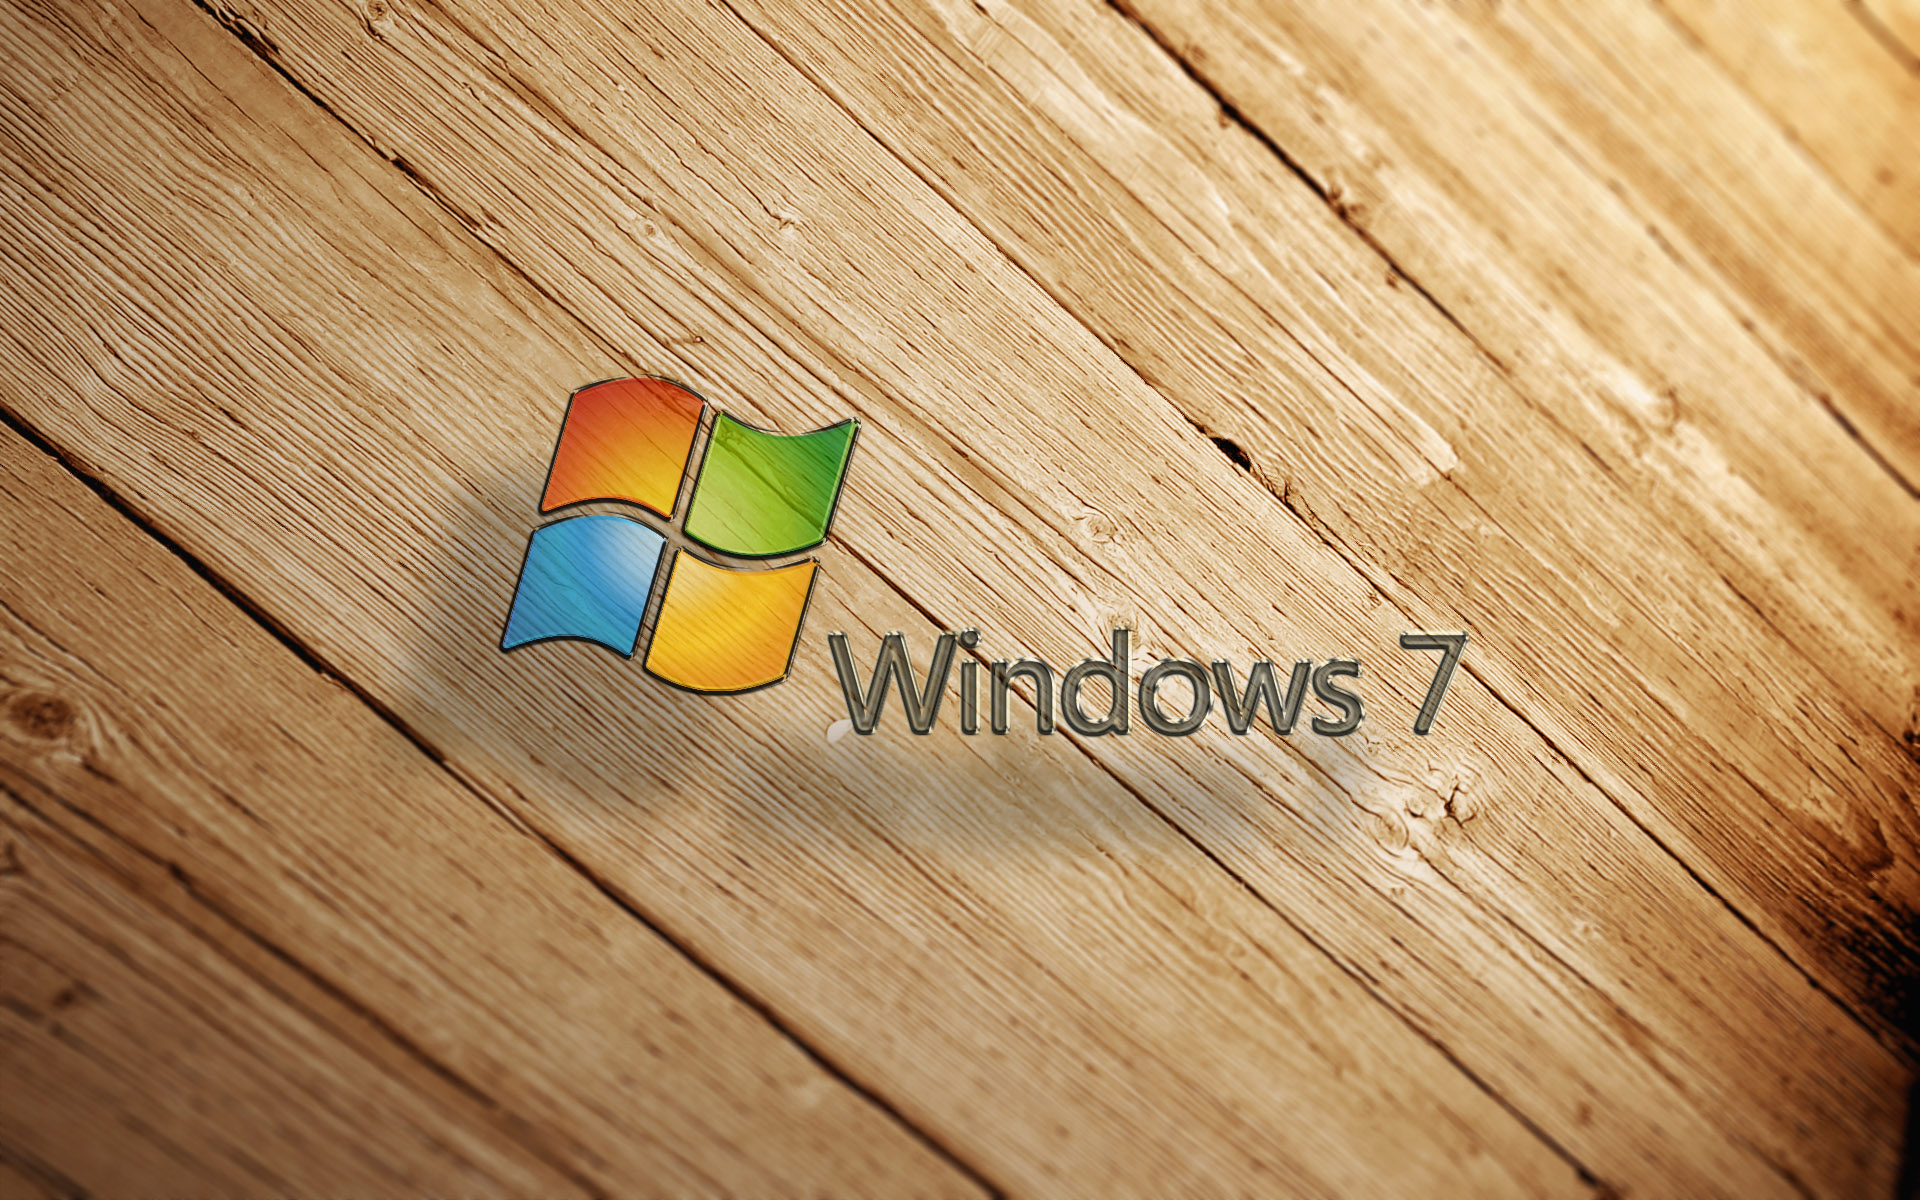 Windows Microsoft Logo Windows 7 Wood Planks Floor Shadow 1920x1200